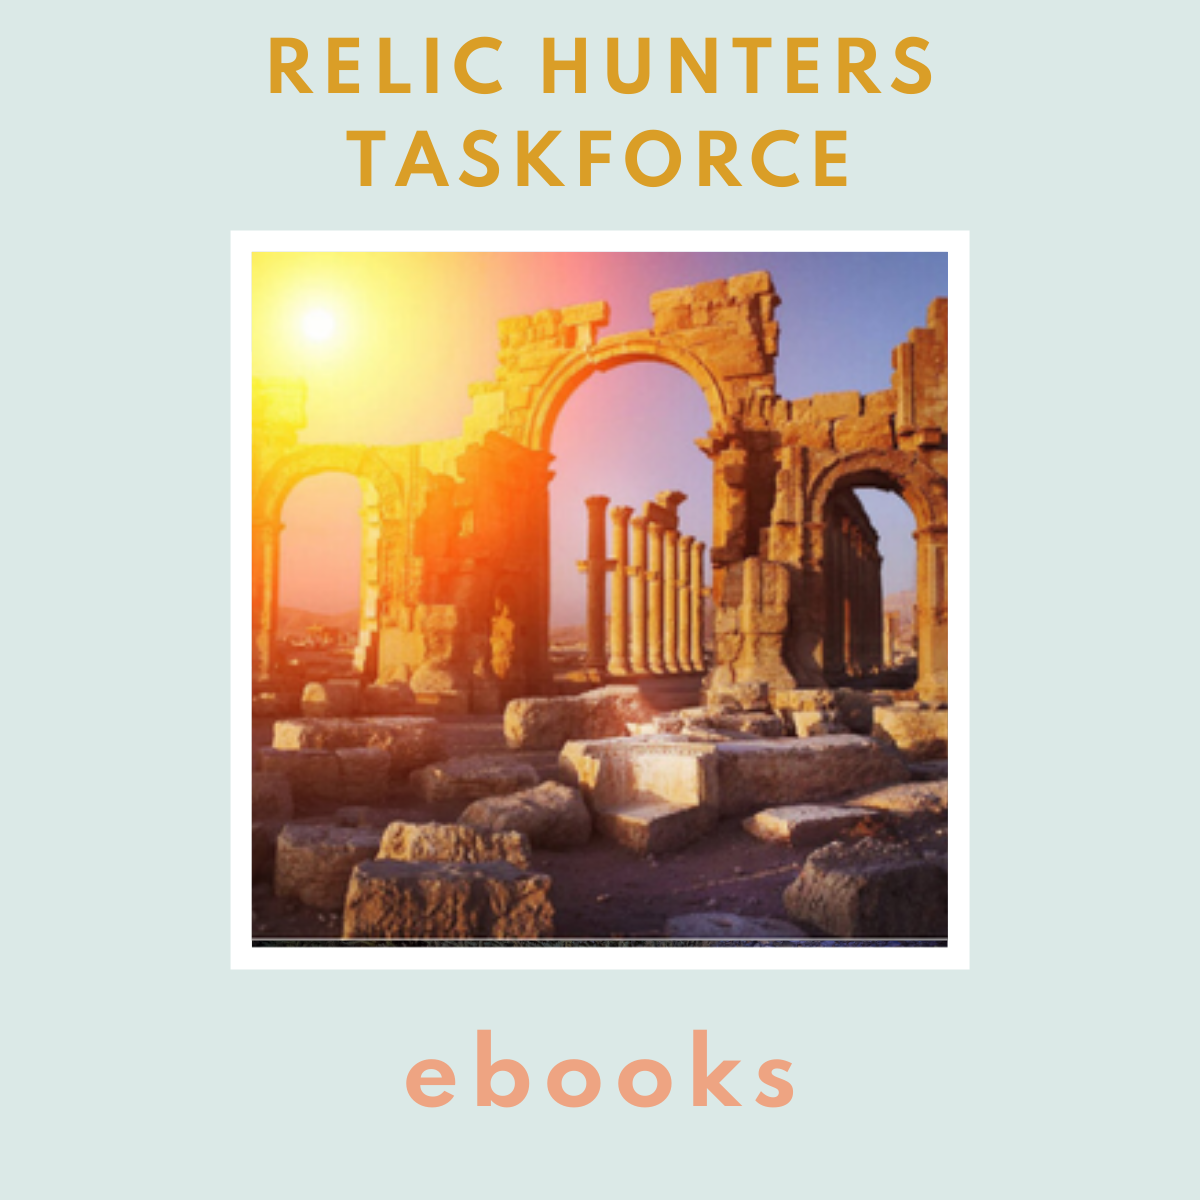 Relic Hunters Taskforce EBOOKS